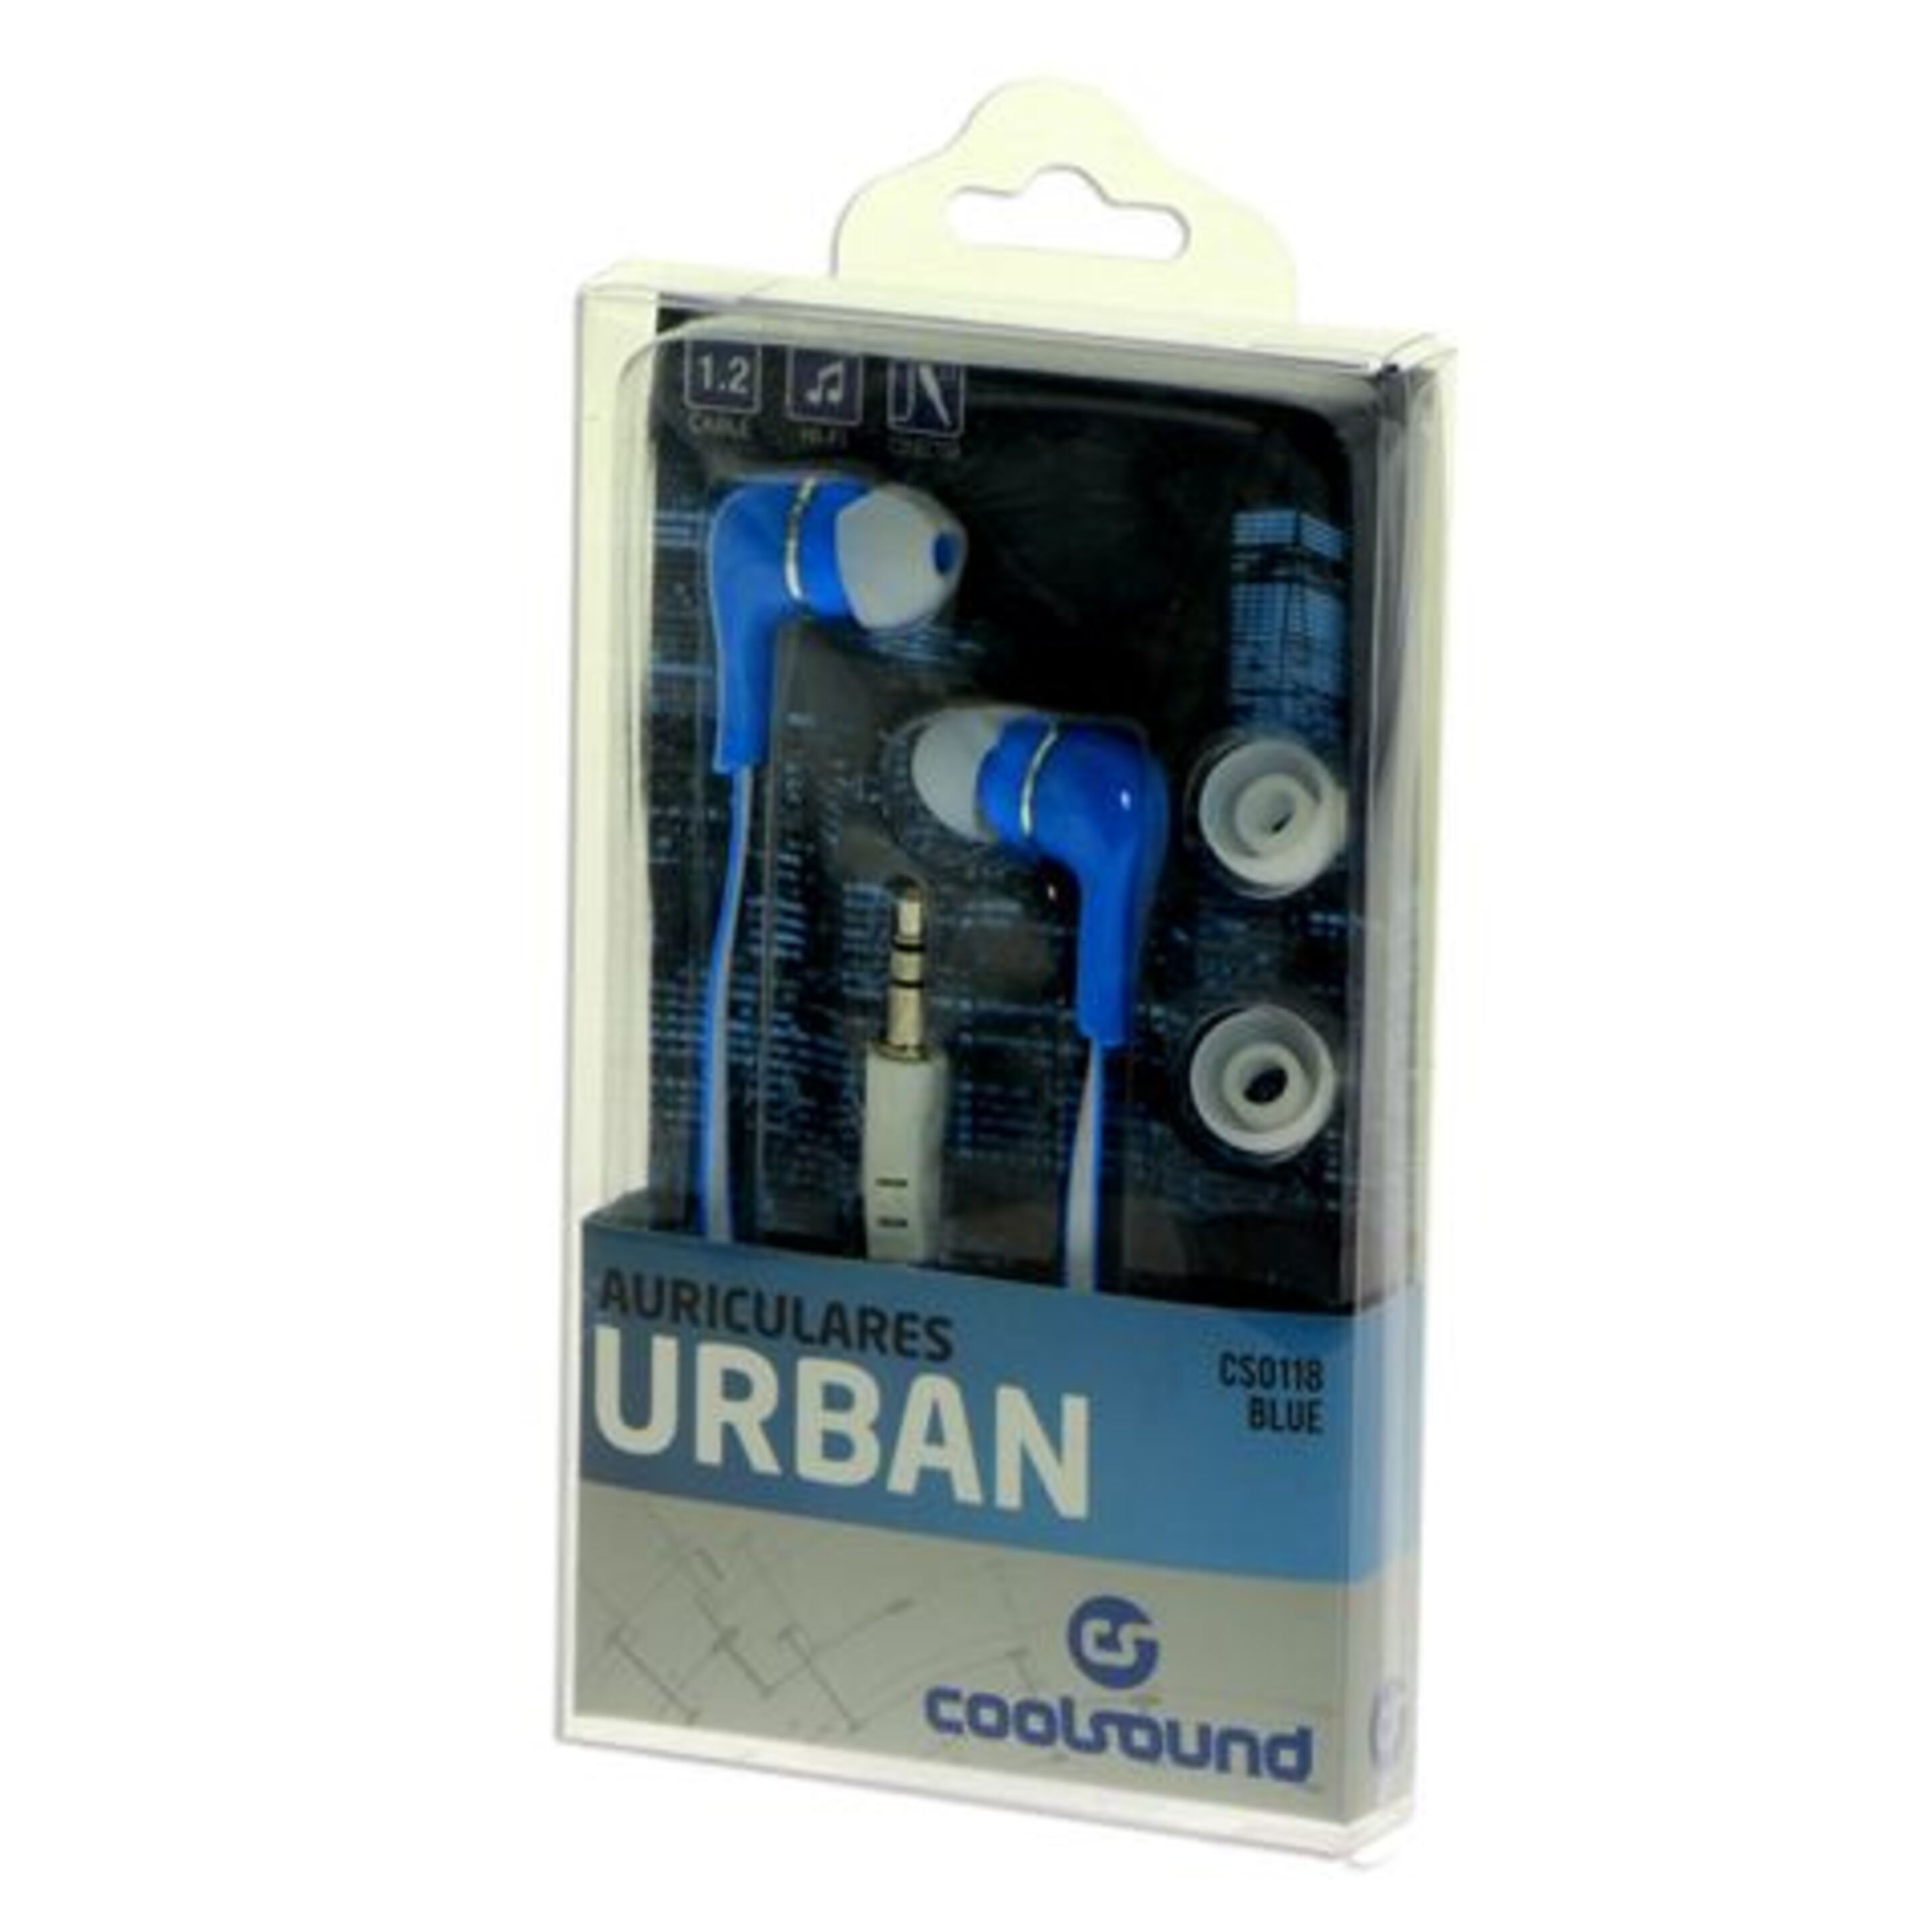 Auriculares Com Fio Coolsound Urban - Azul | Sport Zone MKP